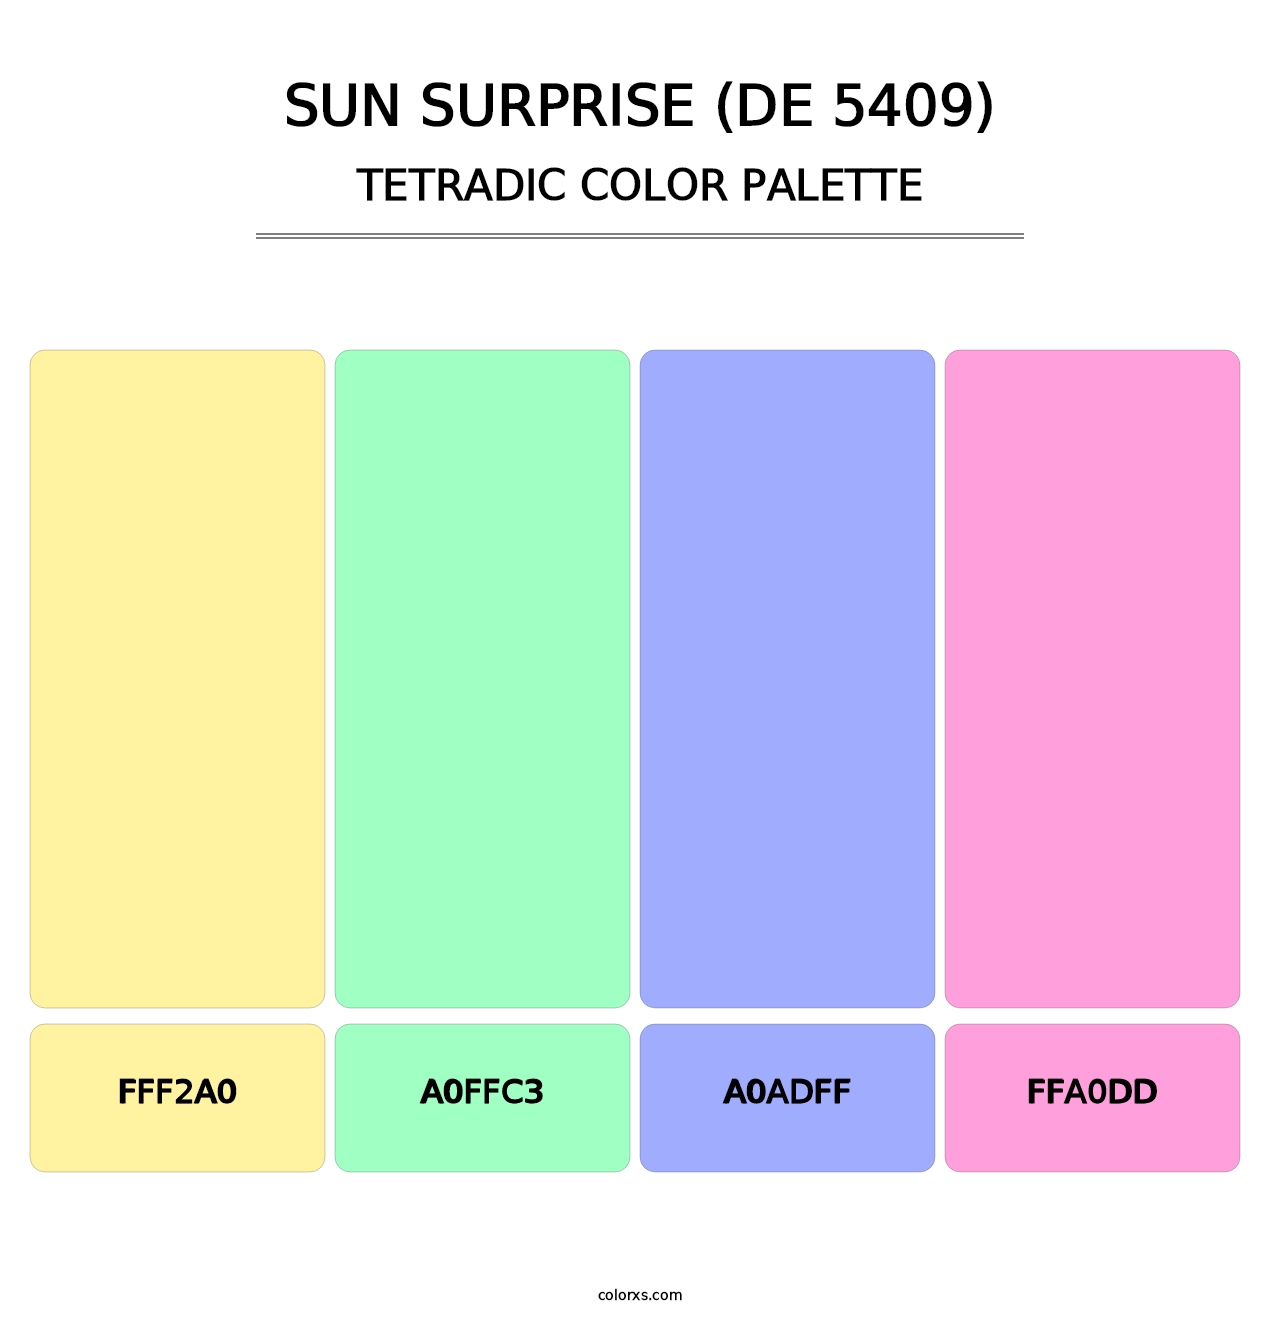 Sun Surprise (DE 5409) - Tetradic Color Palette